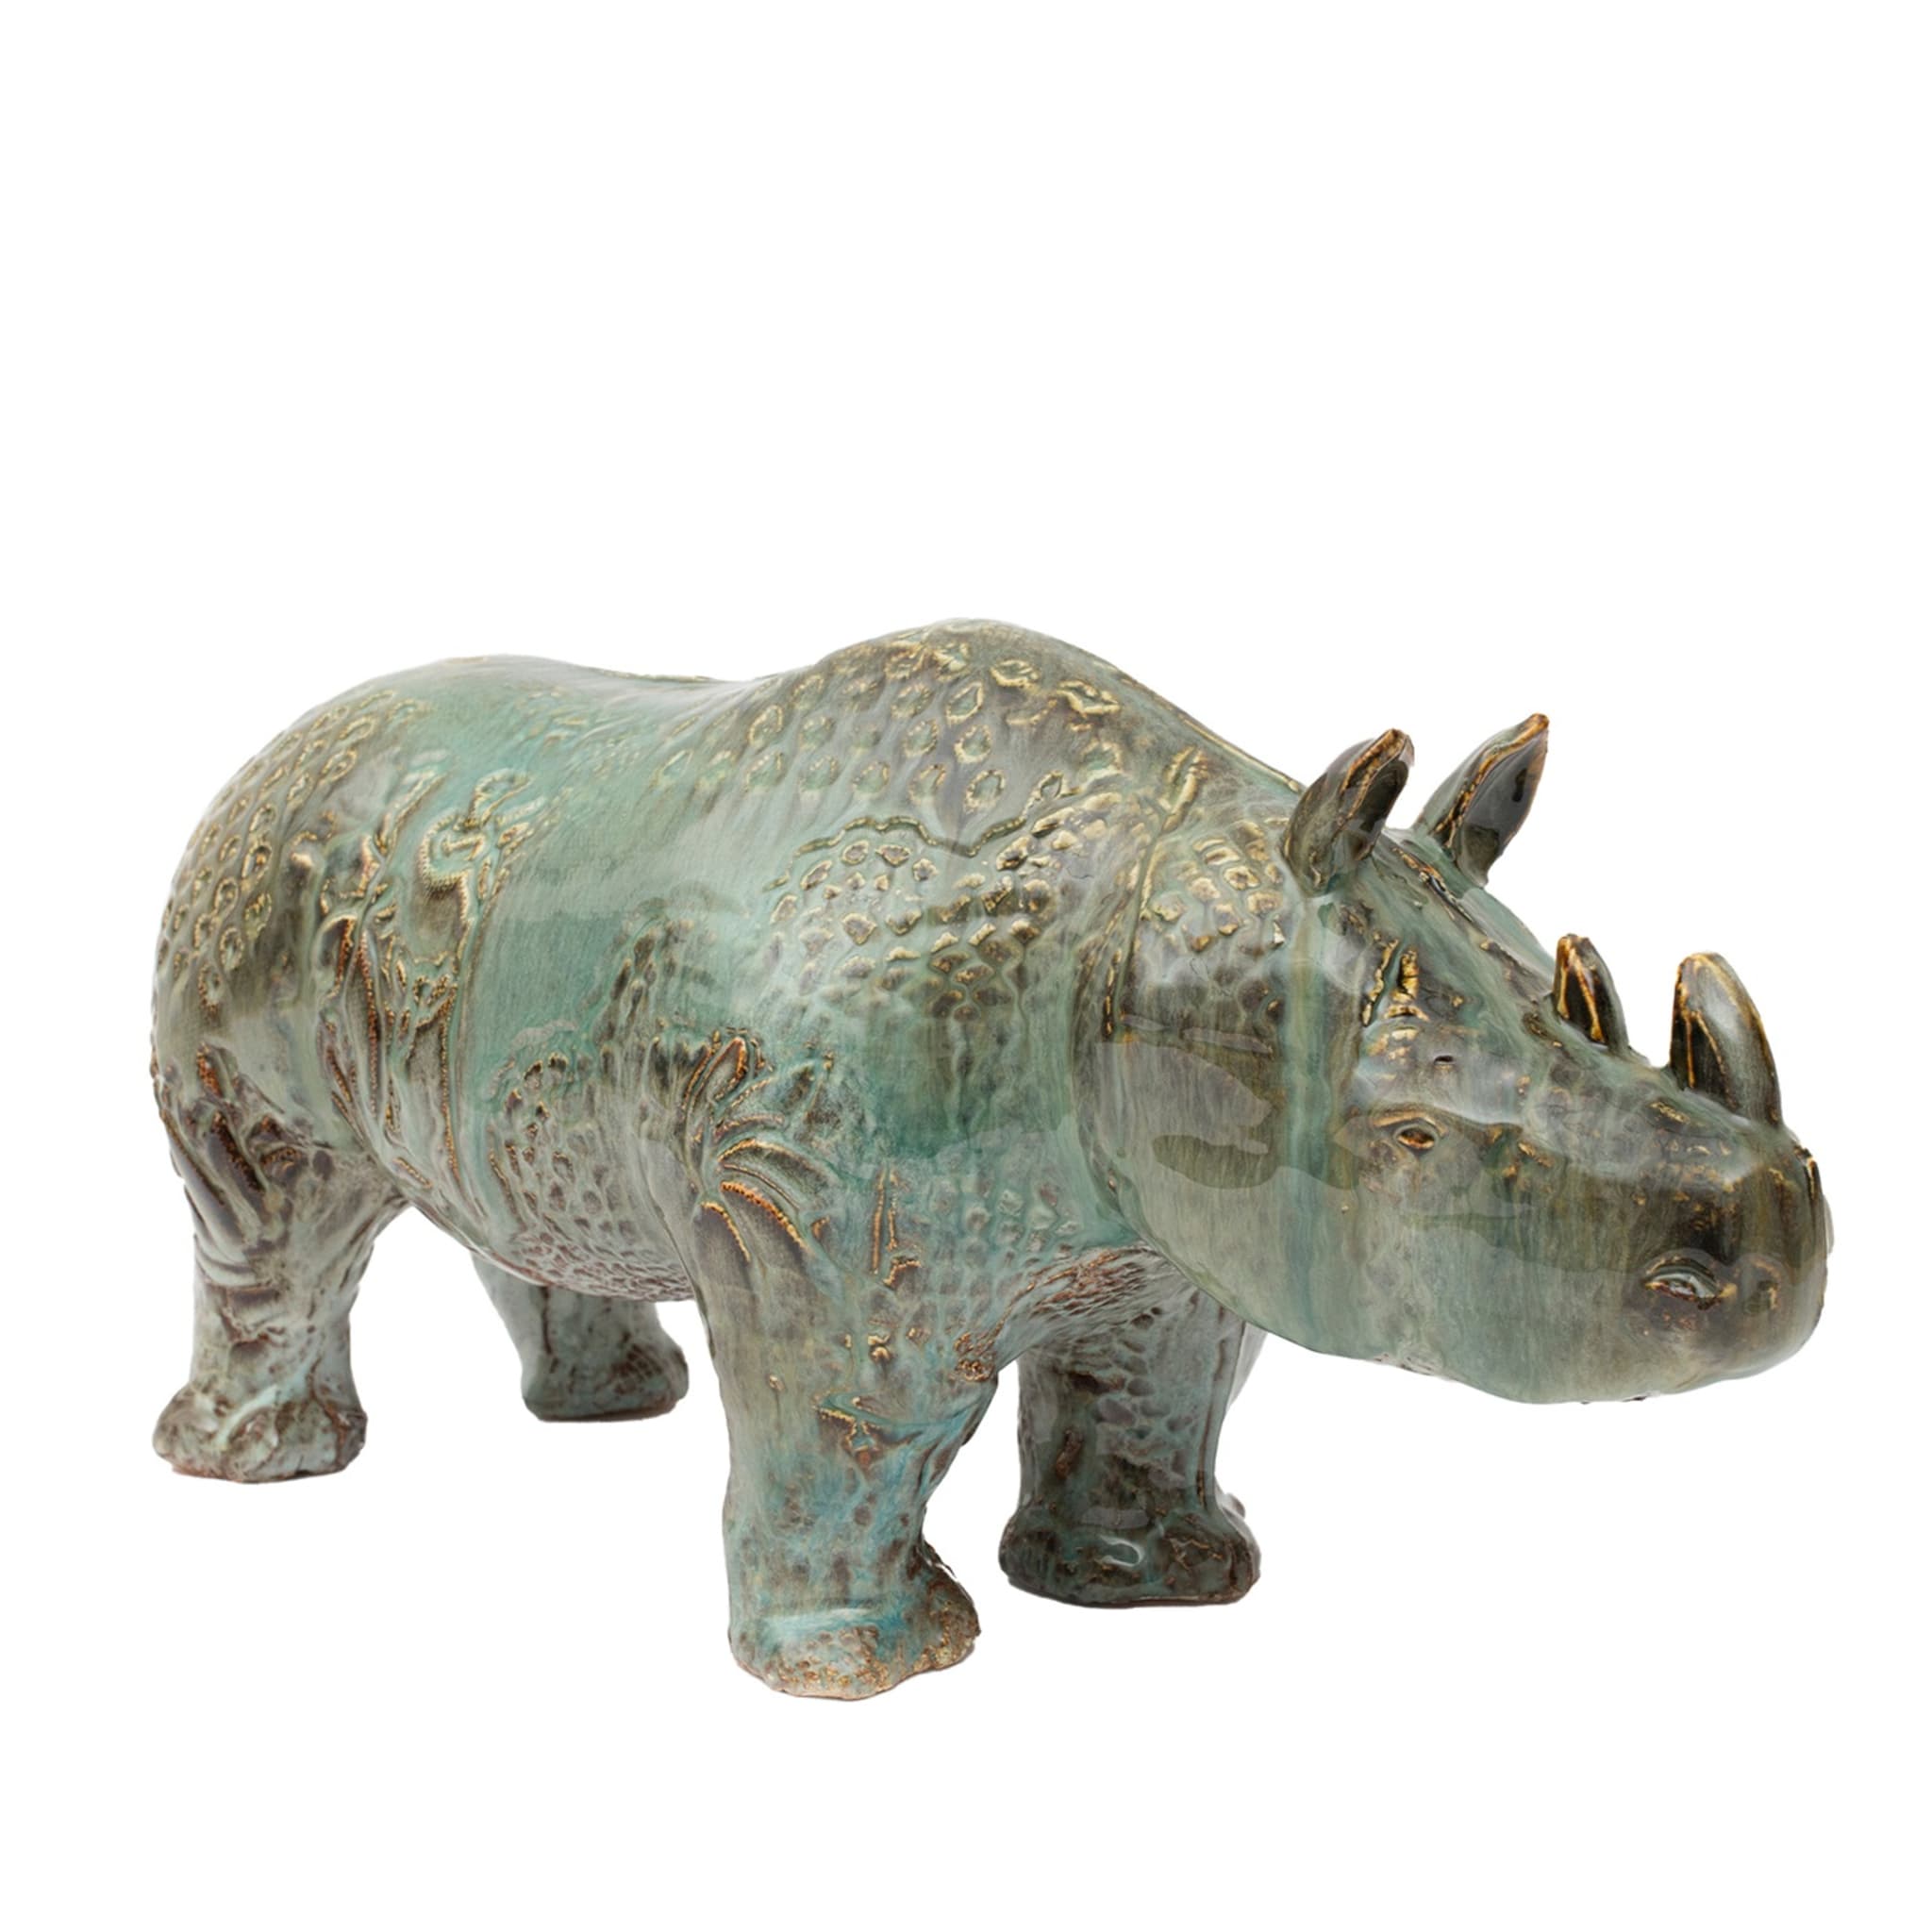 Rhino Sculpture #1 - Main view